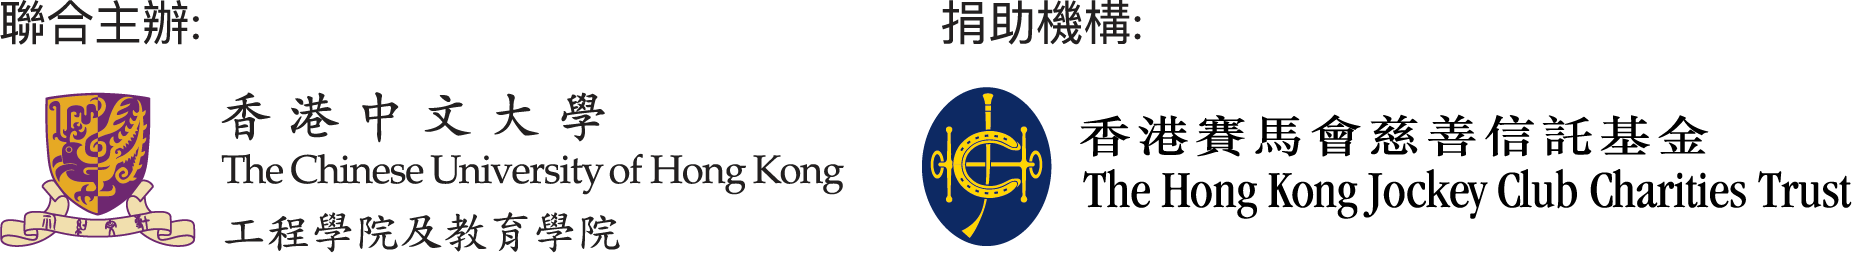 bilingual logo1